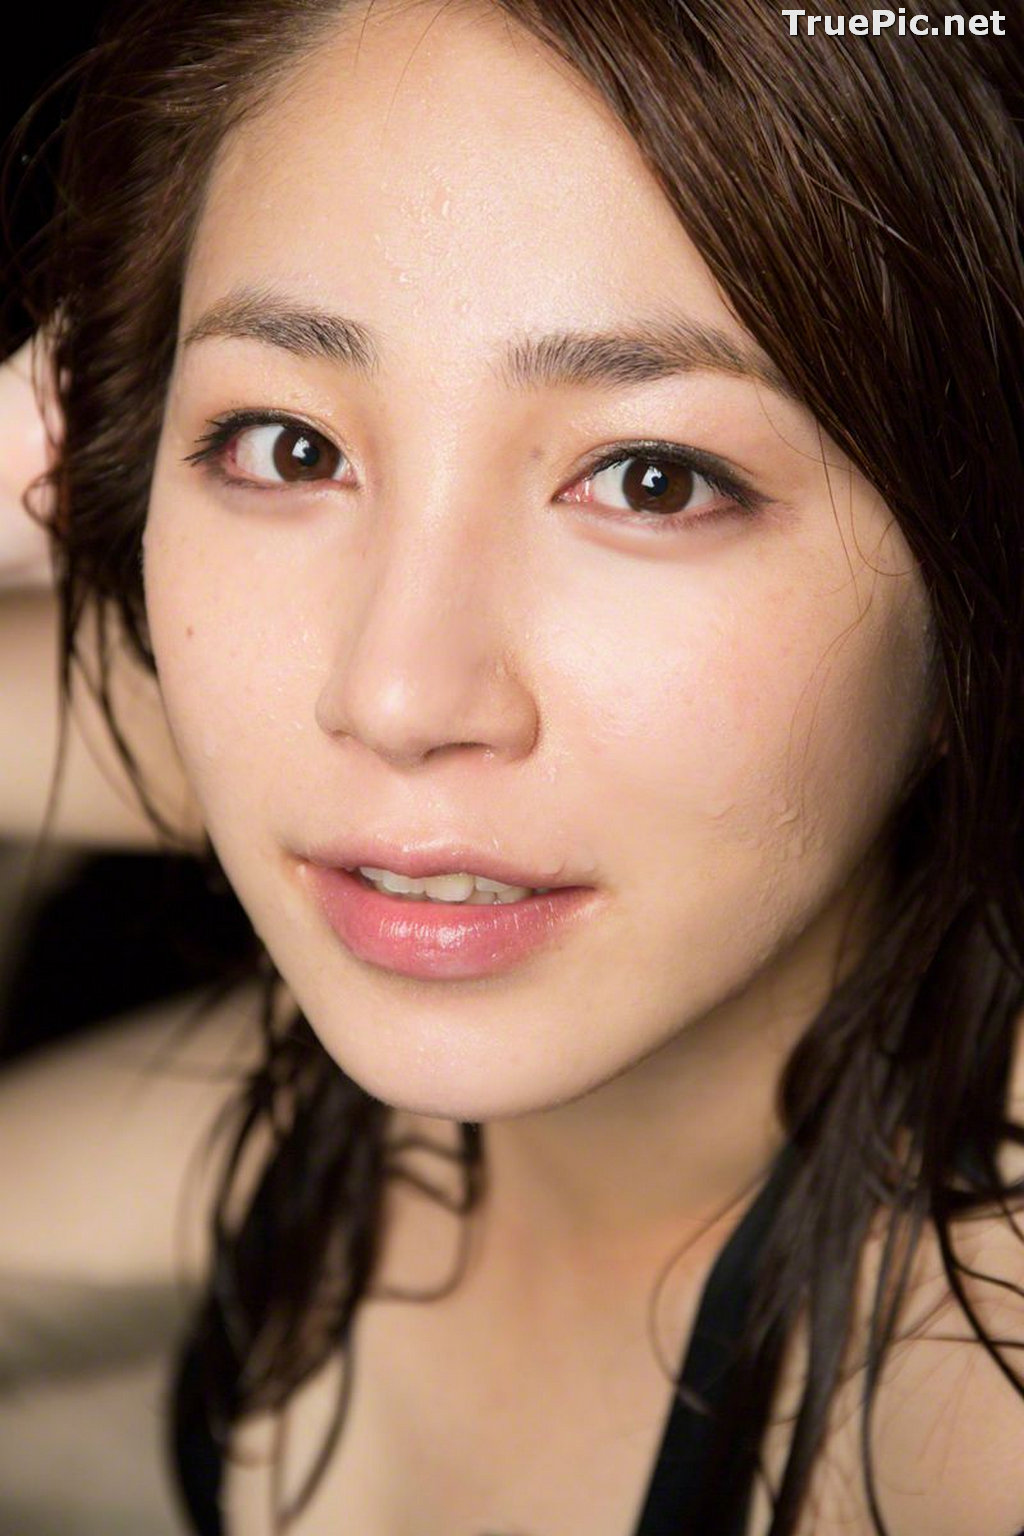 Image [Wanibooks Jacket] No.129 - Japanese Singer and Actress - You Kikkawa - TruePic.net - Picture-177